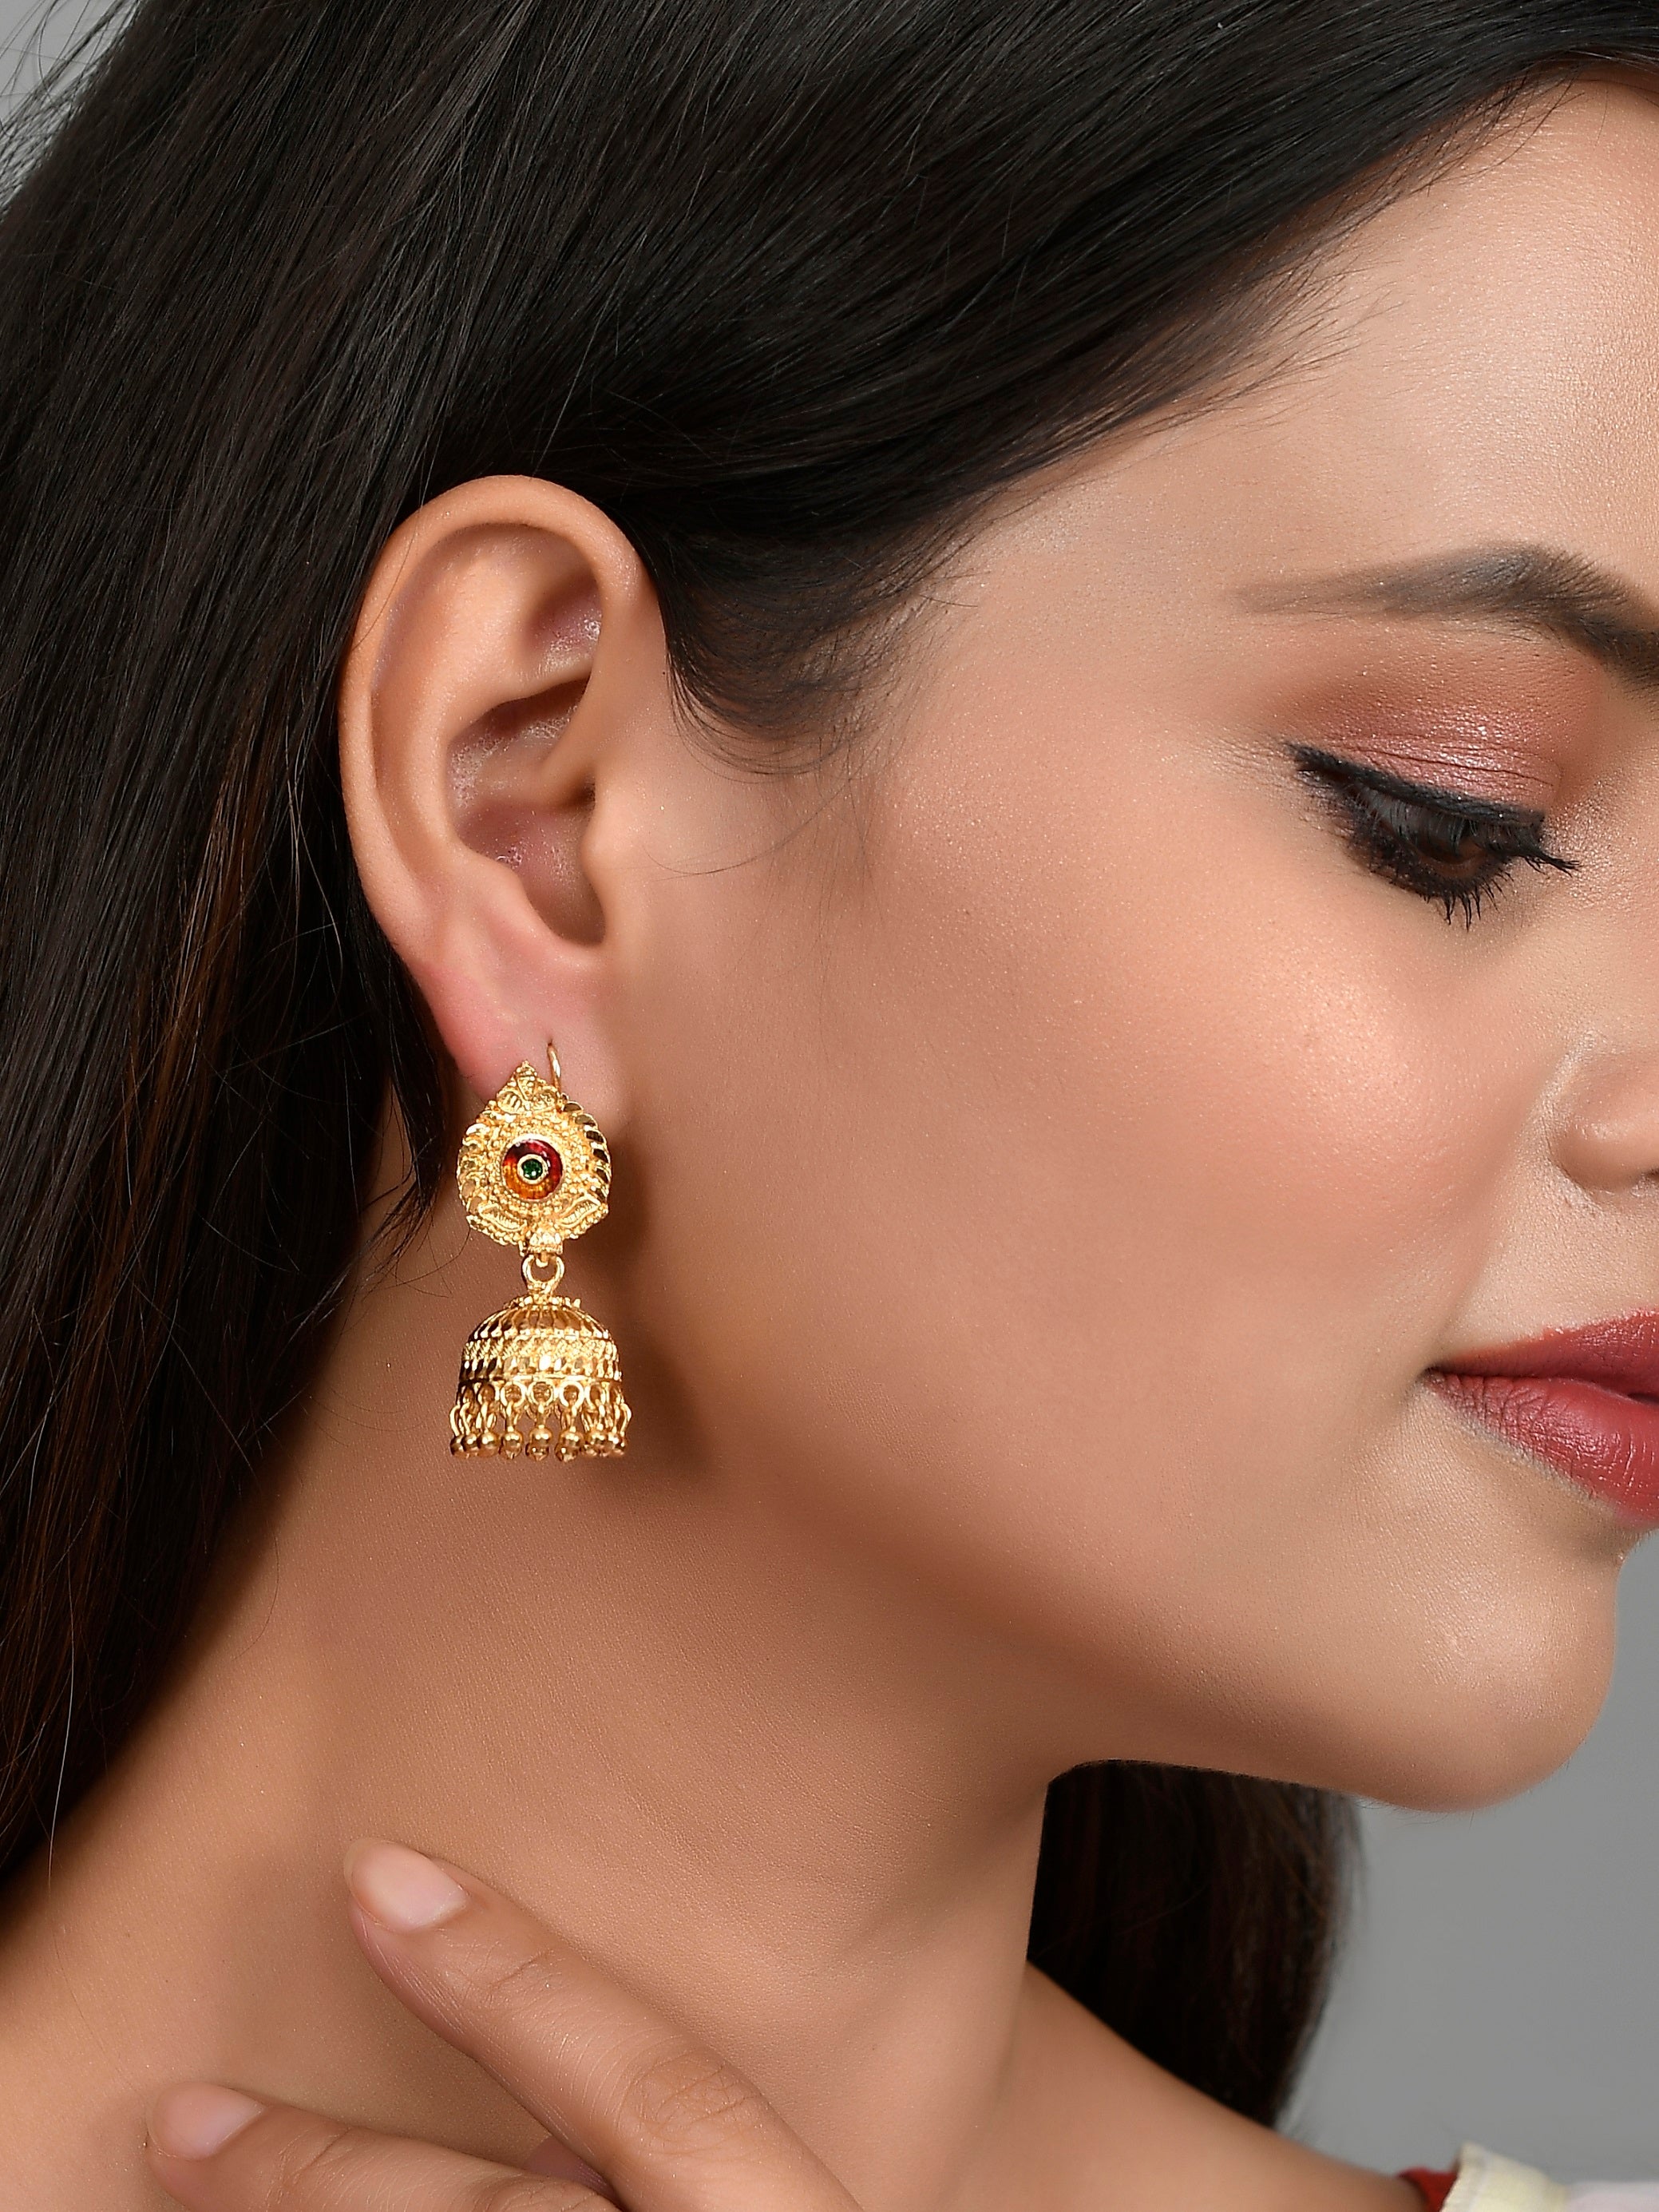 Update more than 106 ethnic earrings jhumka best